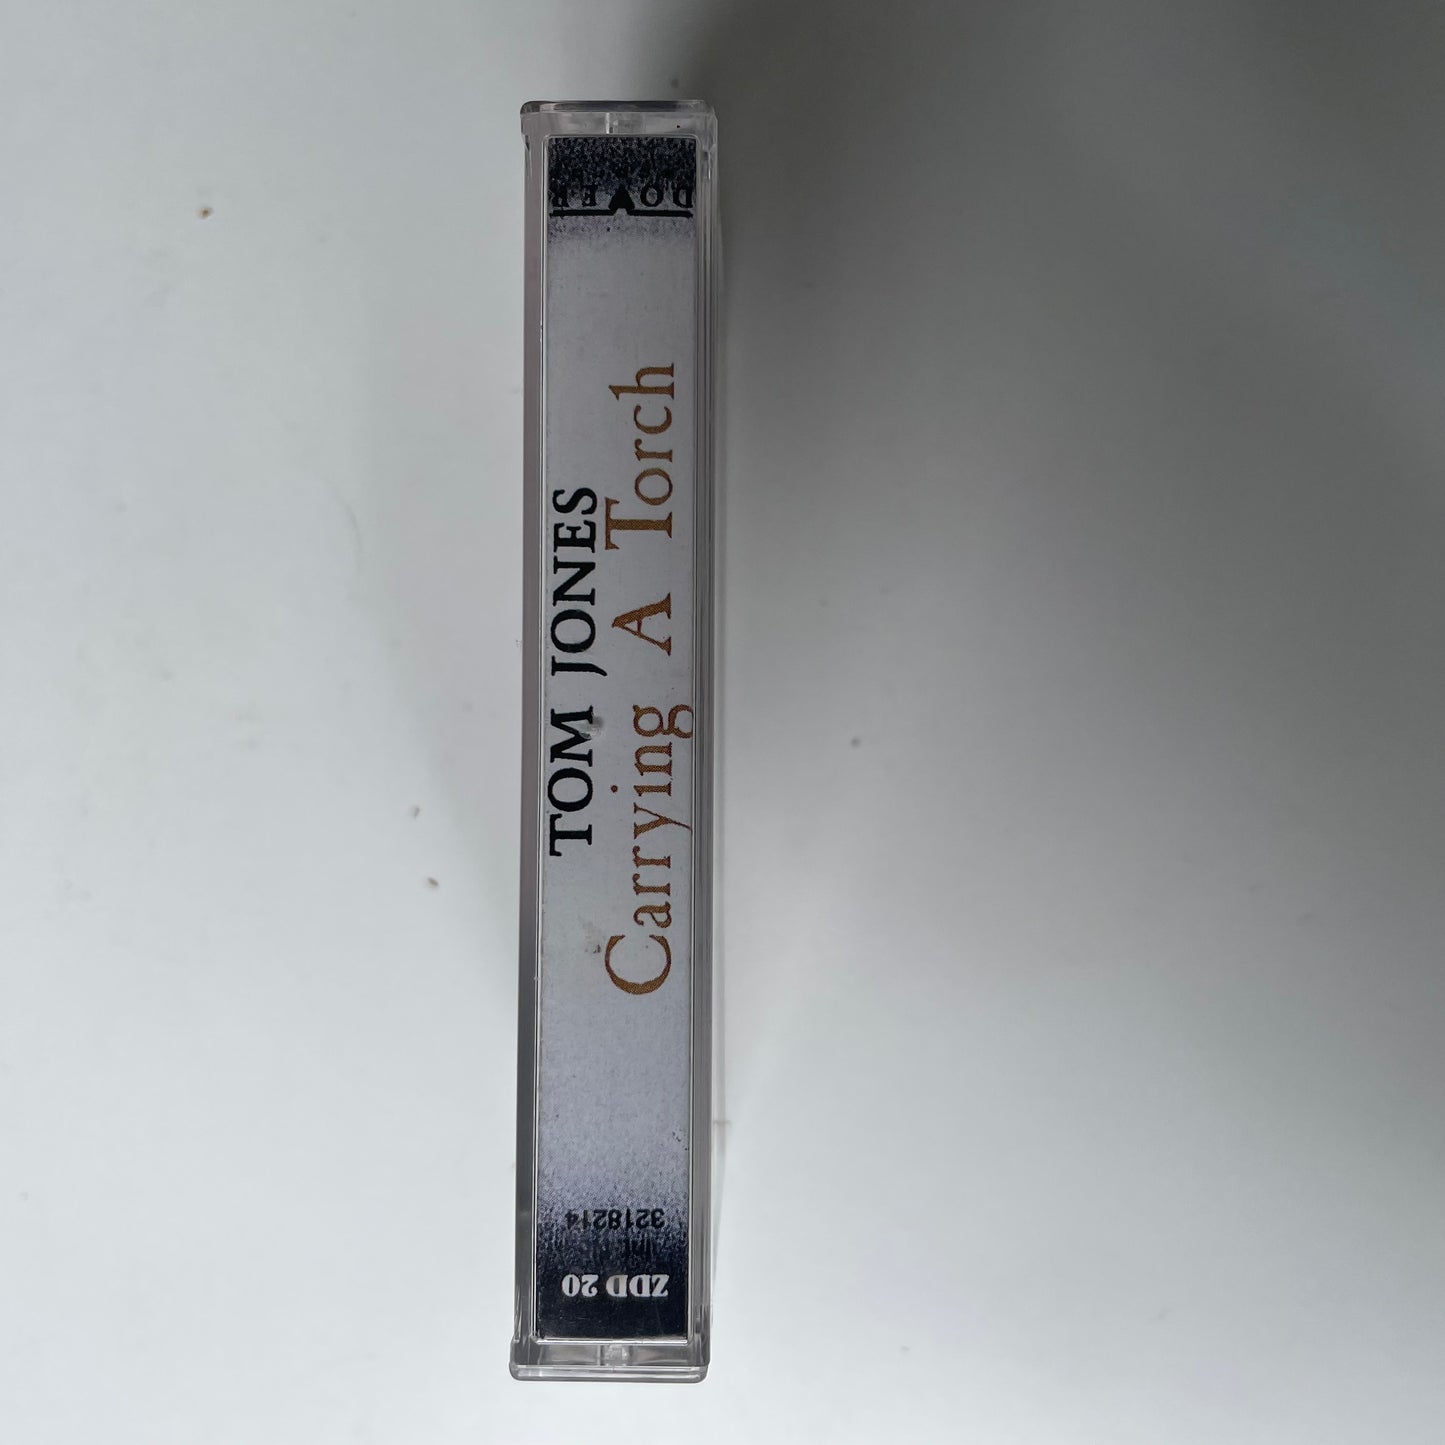 Tape Cassette Tom Jones Carrying a Torch title